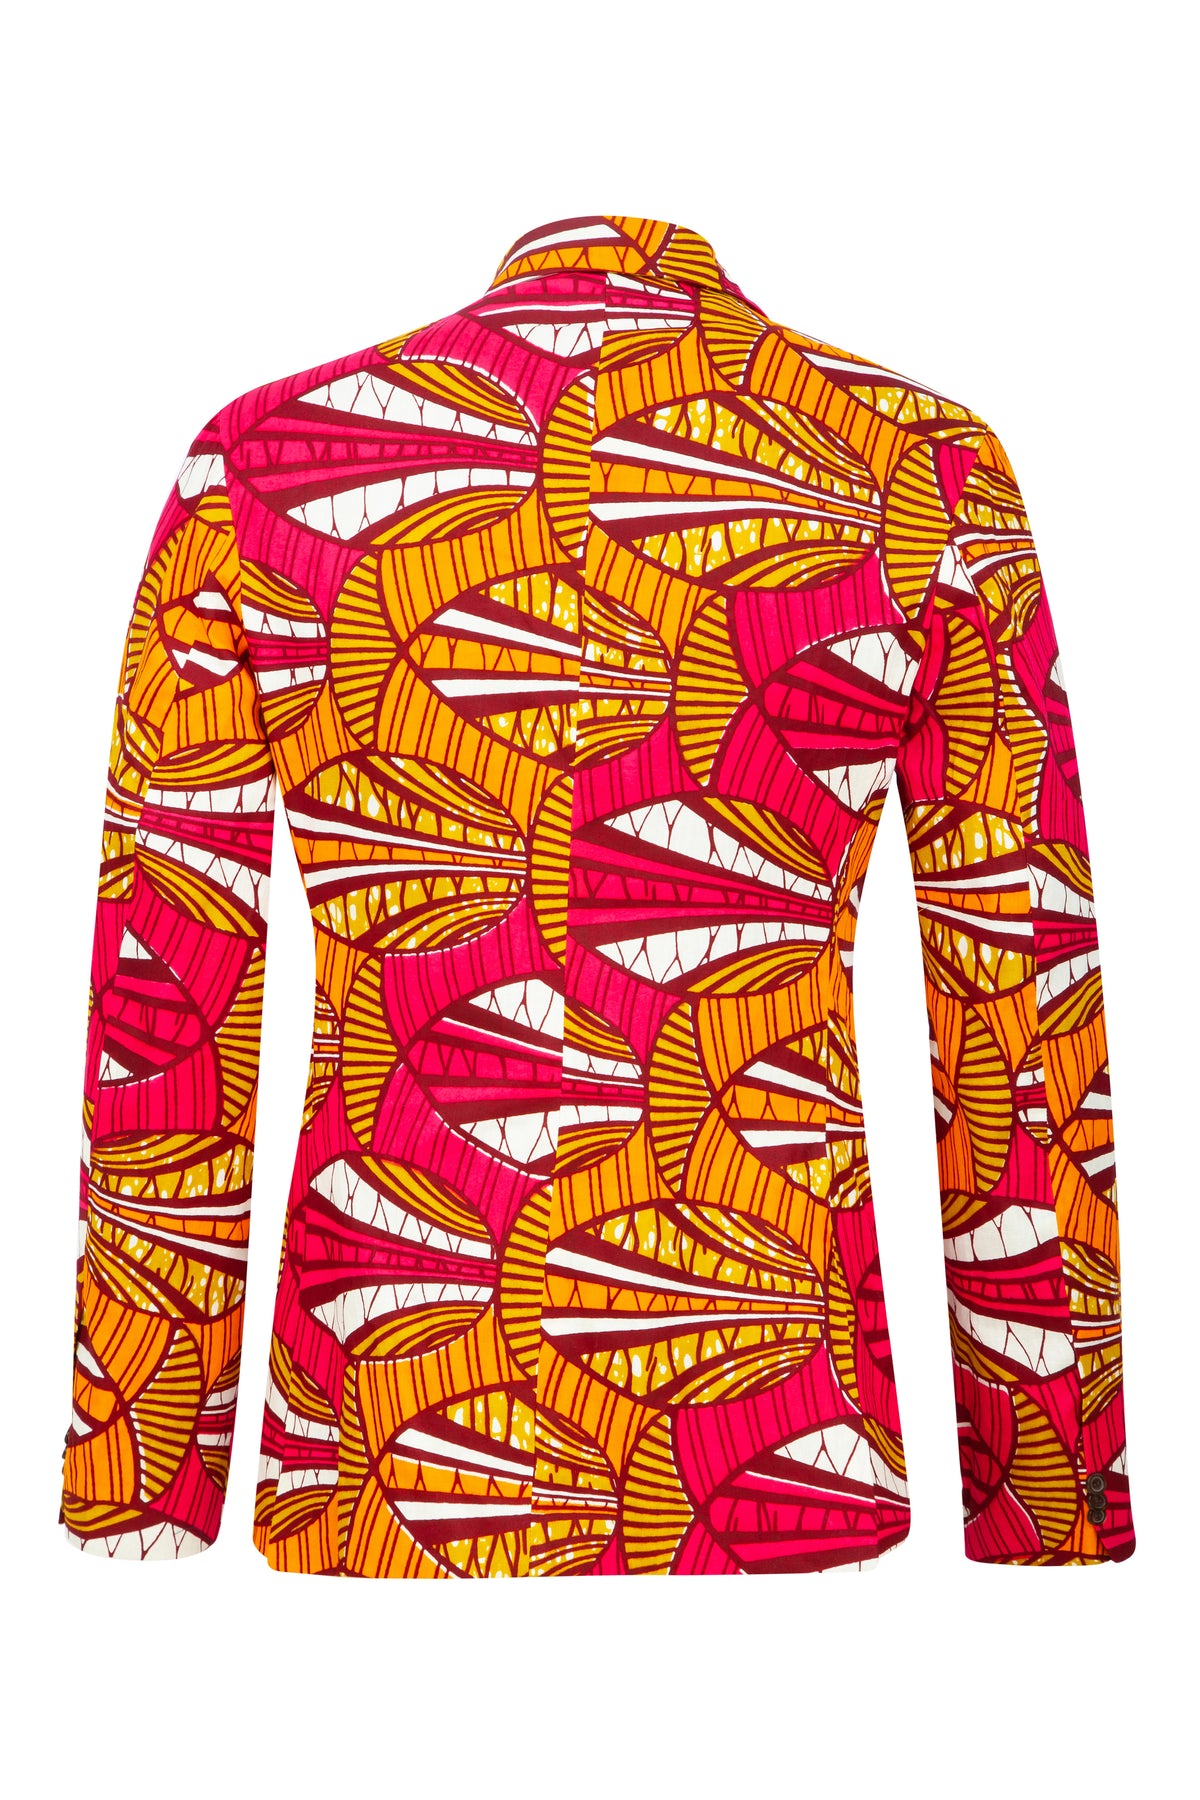 Joshua African print blazer- Tulip - OHEMA OHENE AFRICAN INSPIRED FASHION